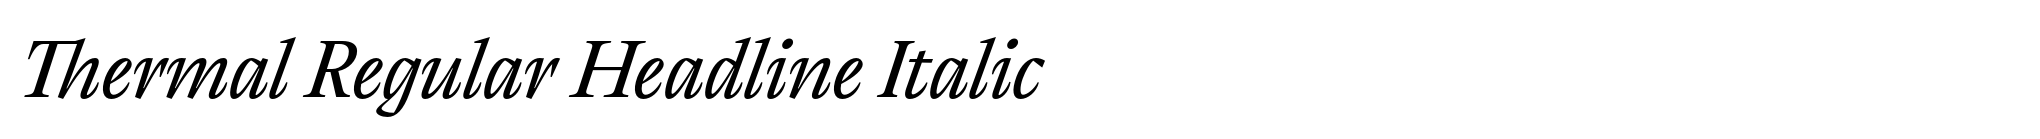 Thermal Regular Headline Italic image